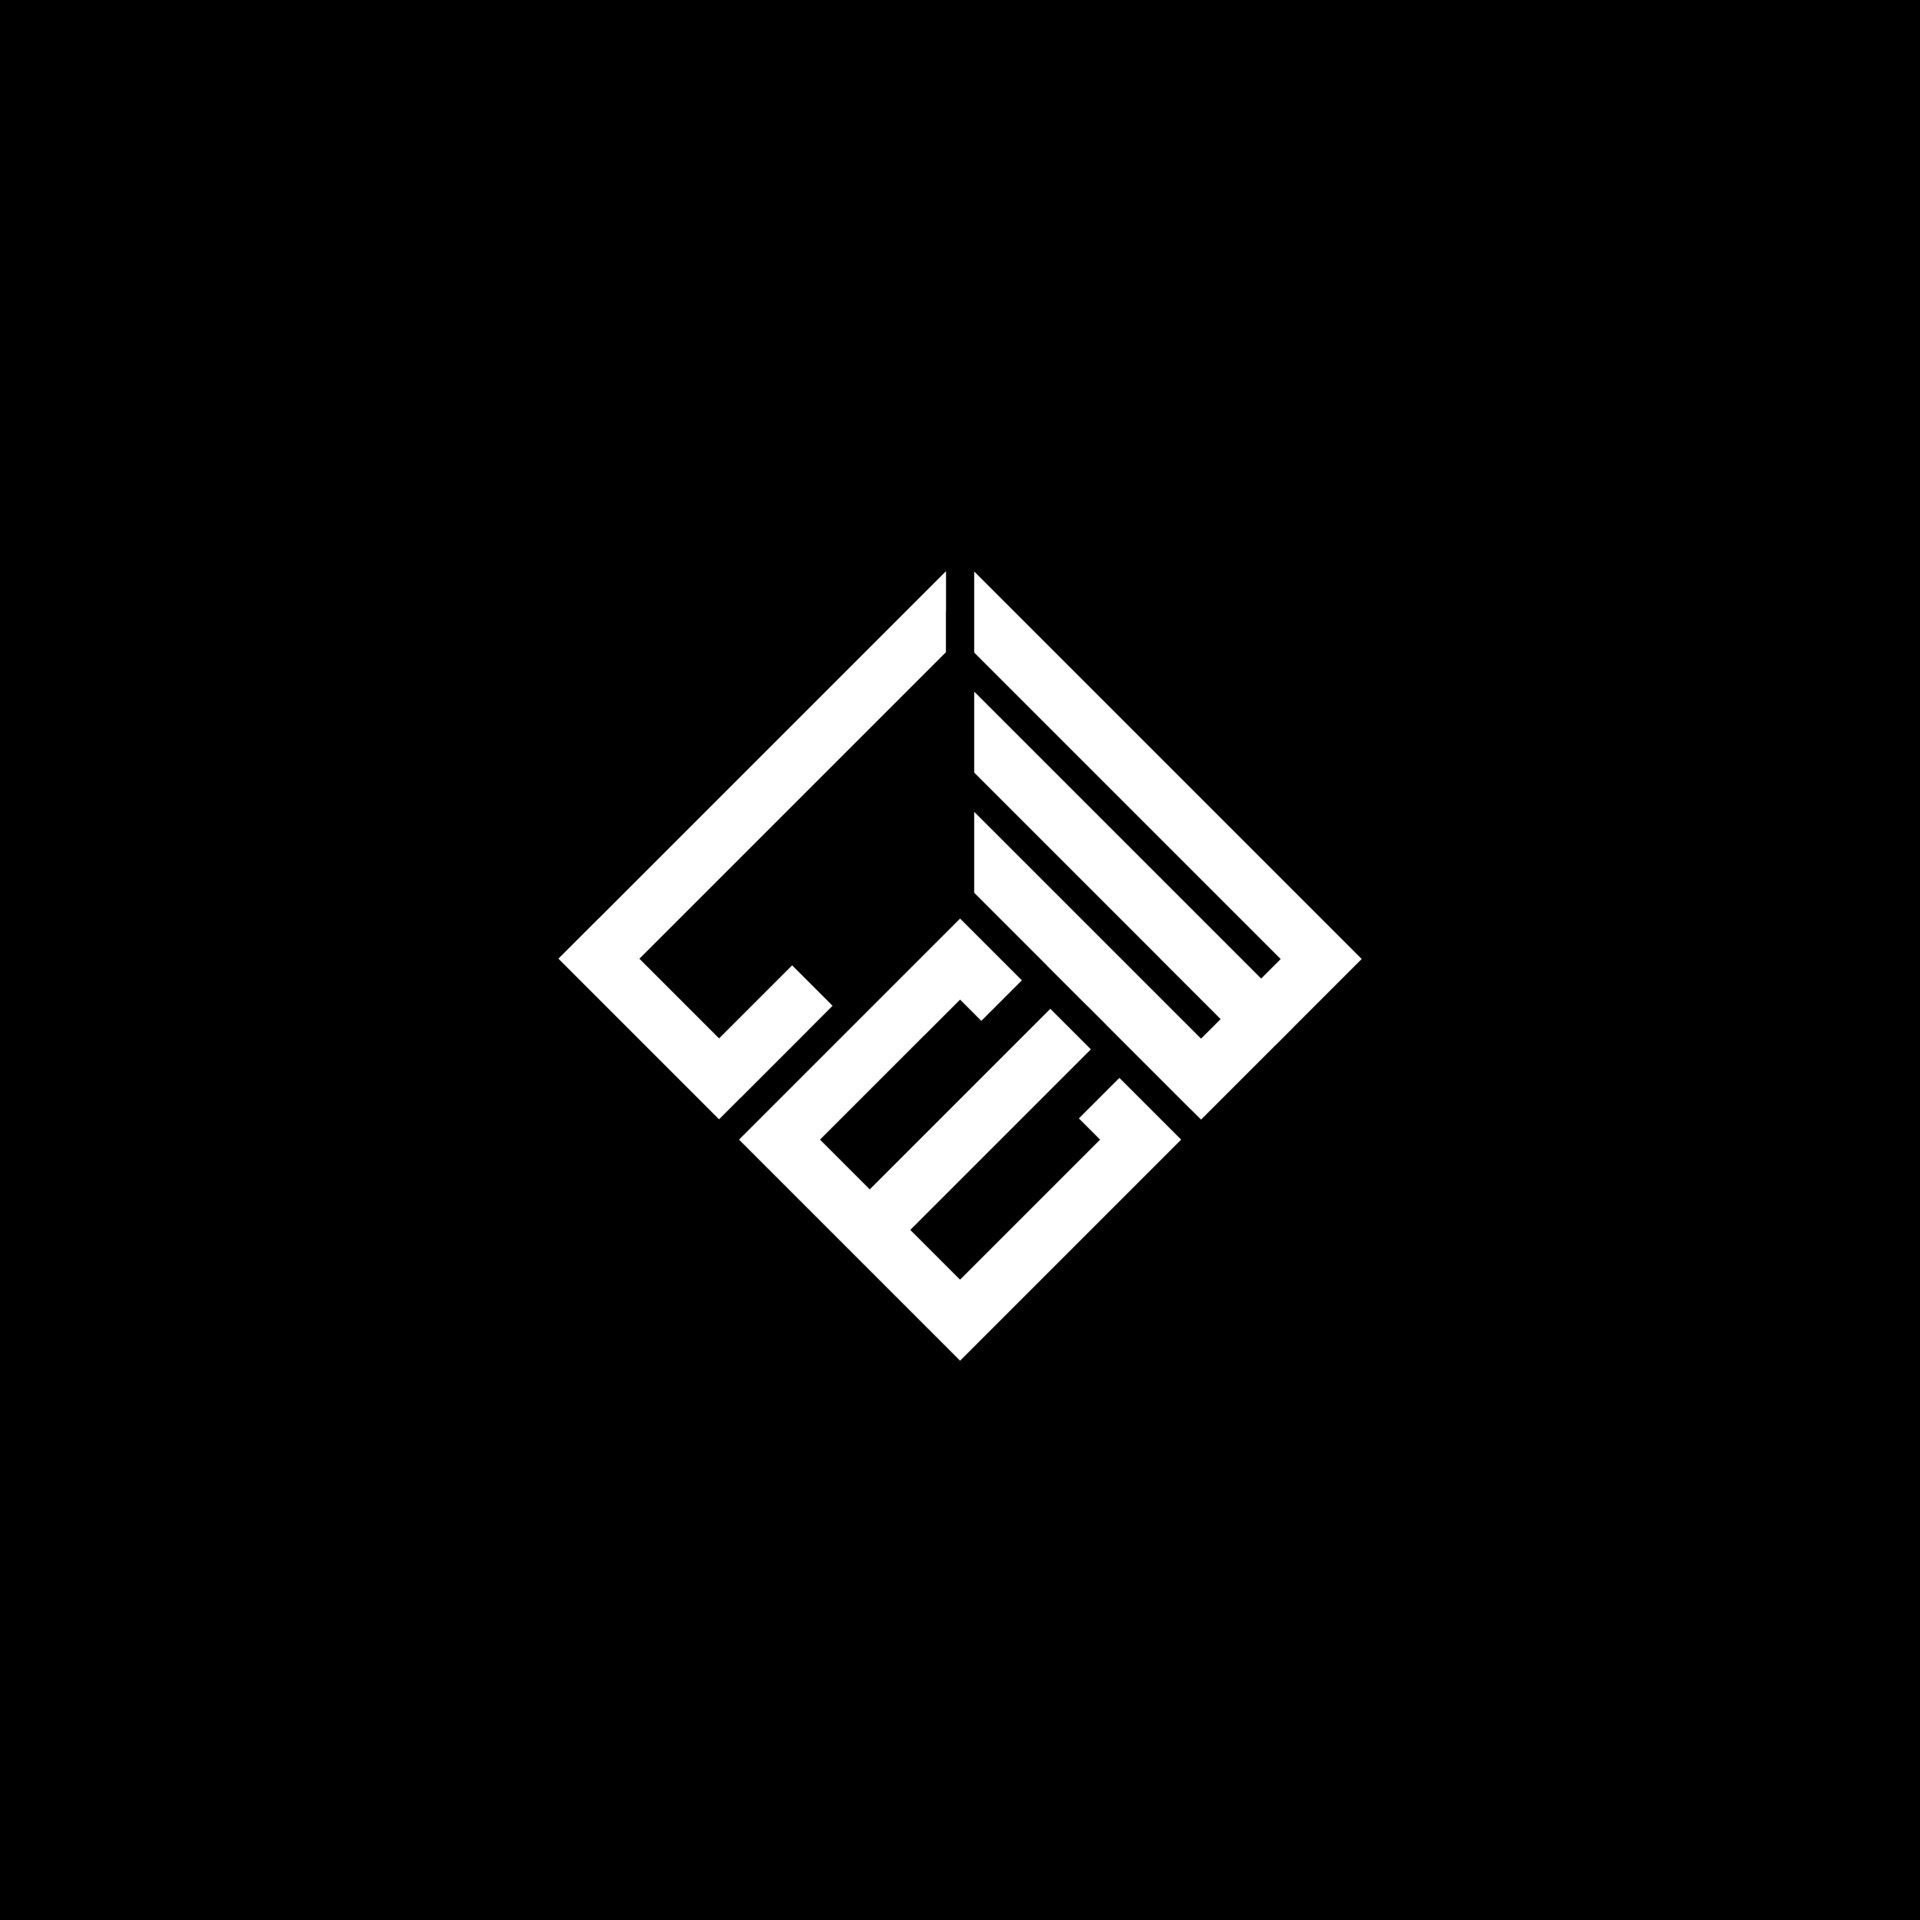 LEW letter logo design on black background. LEW creative initials